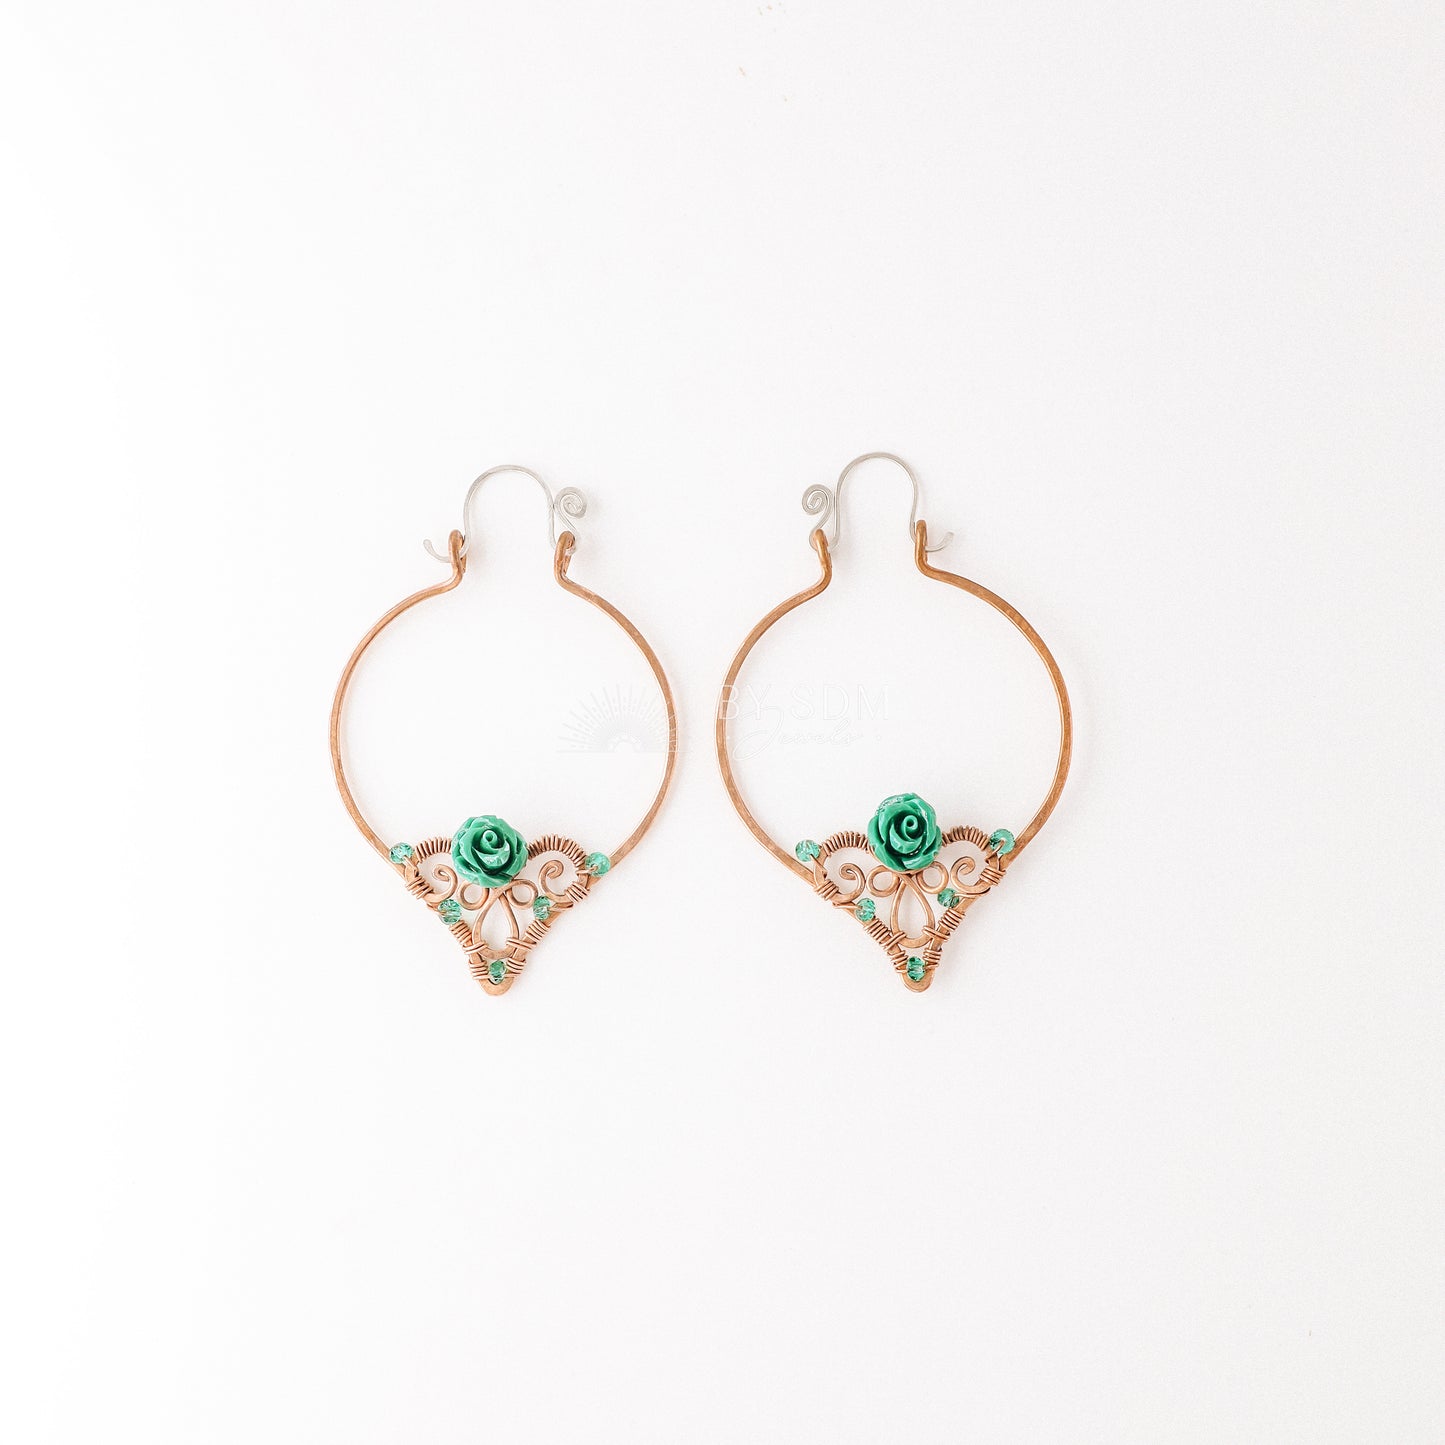 Emerald Hoop Earrings • Green Hoops • May Birthstone • Copper Hoop Earrings • Emerald Jewelry • BYSDMJEWELS